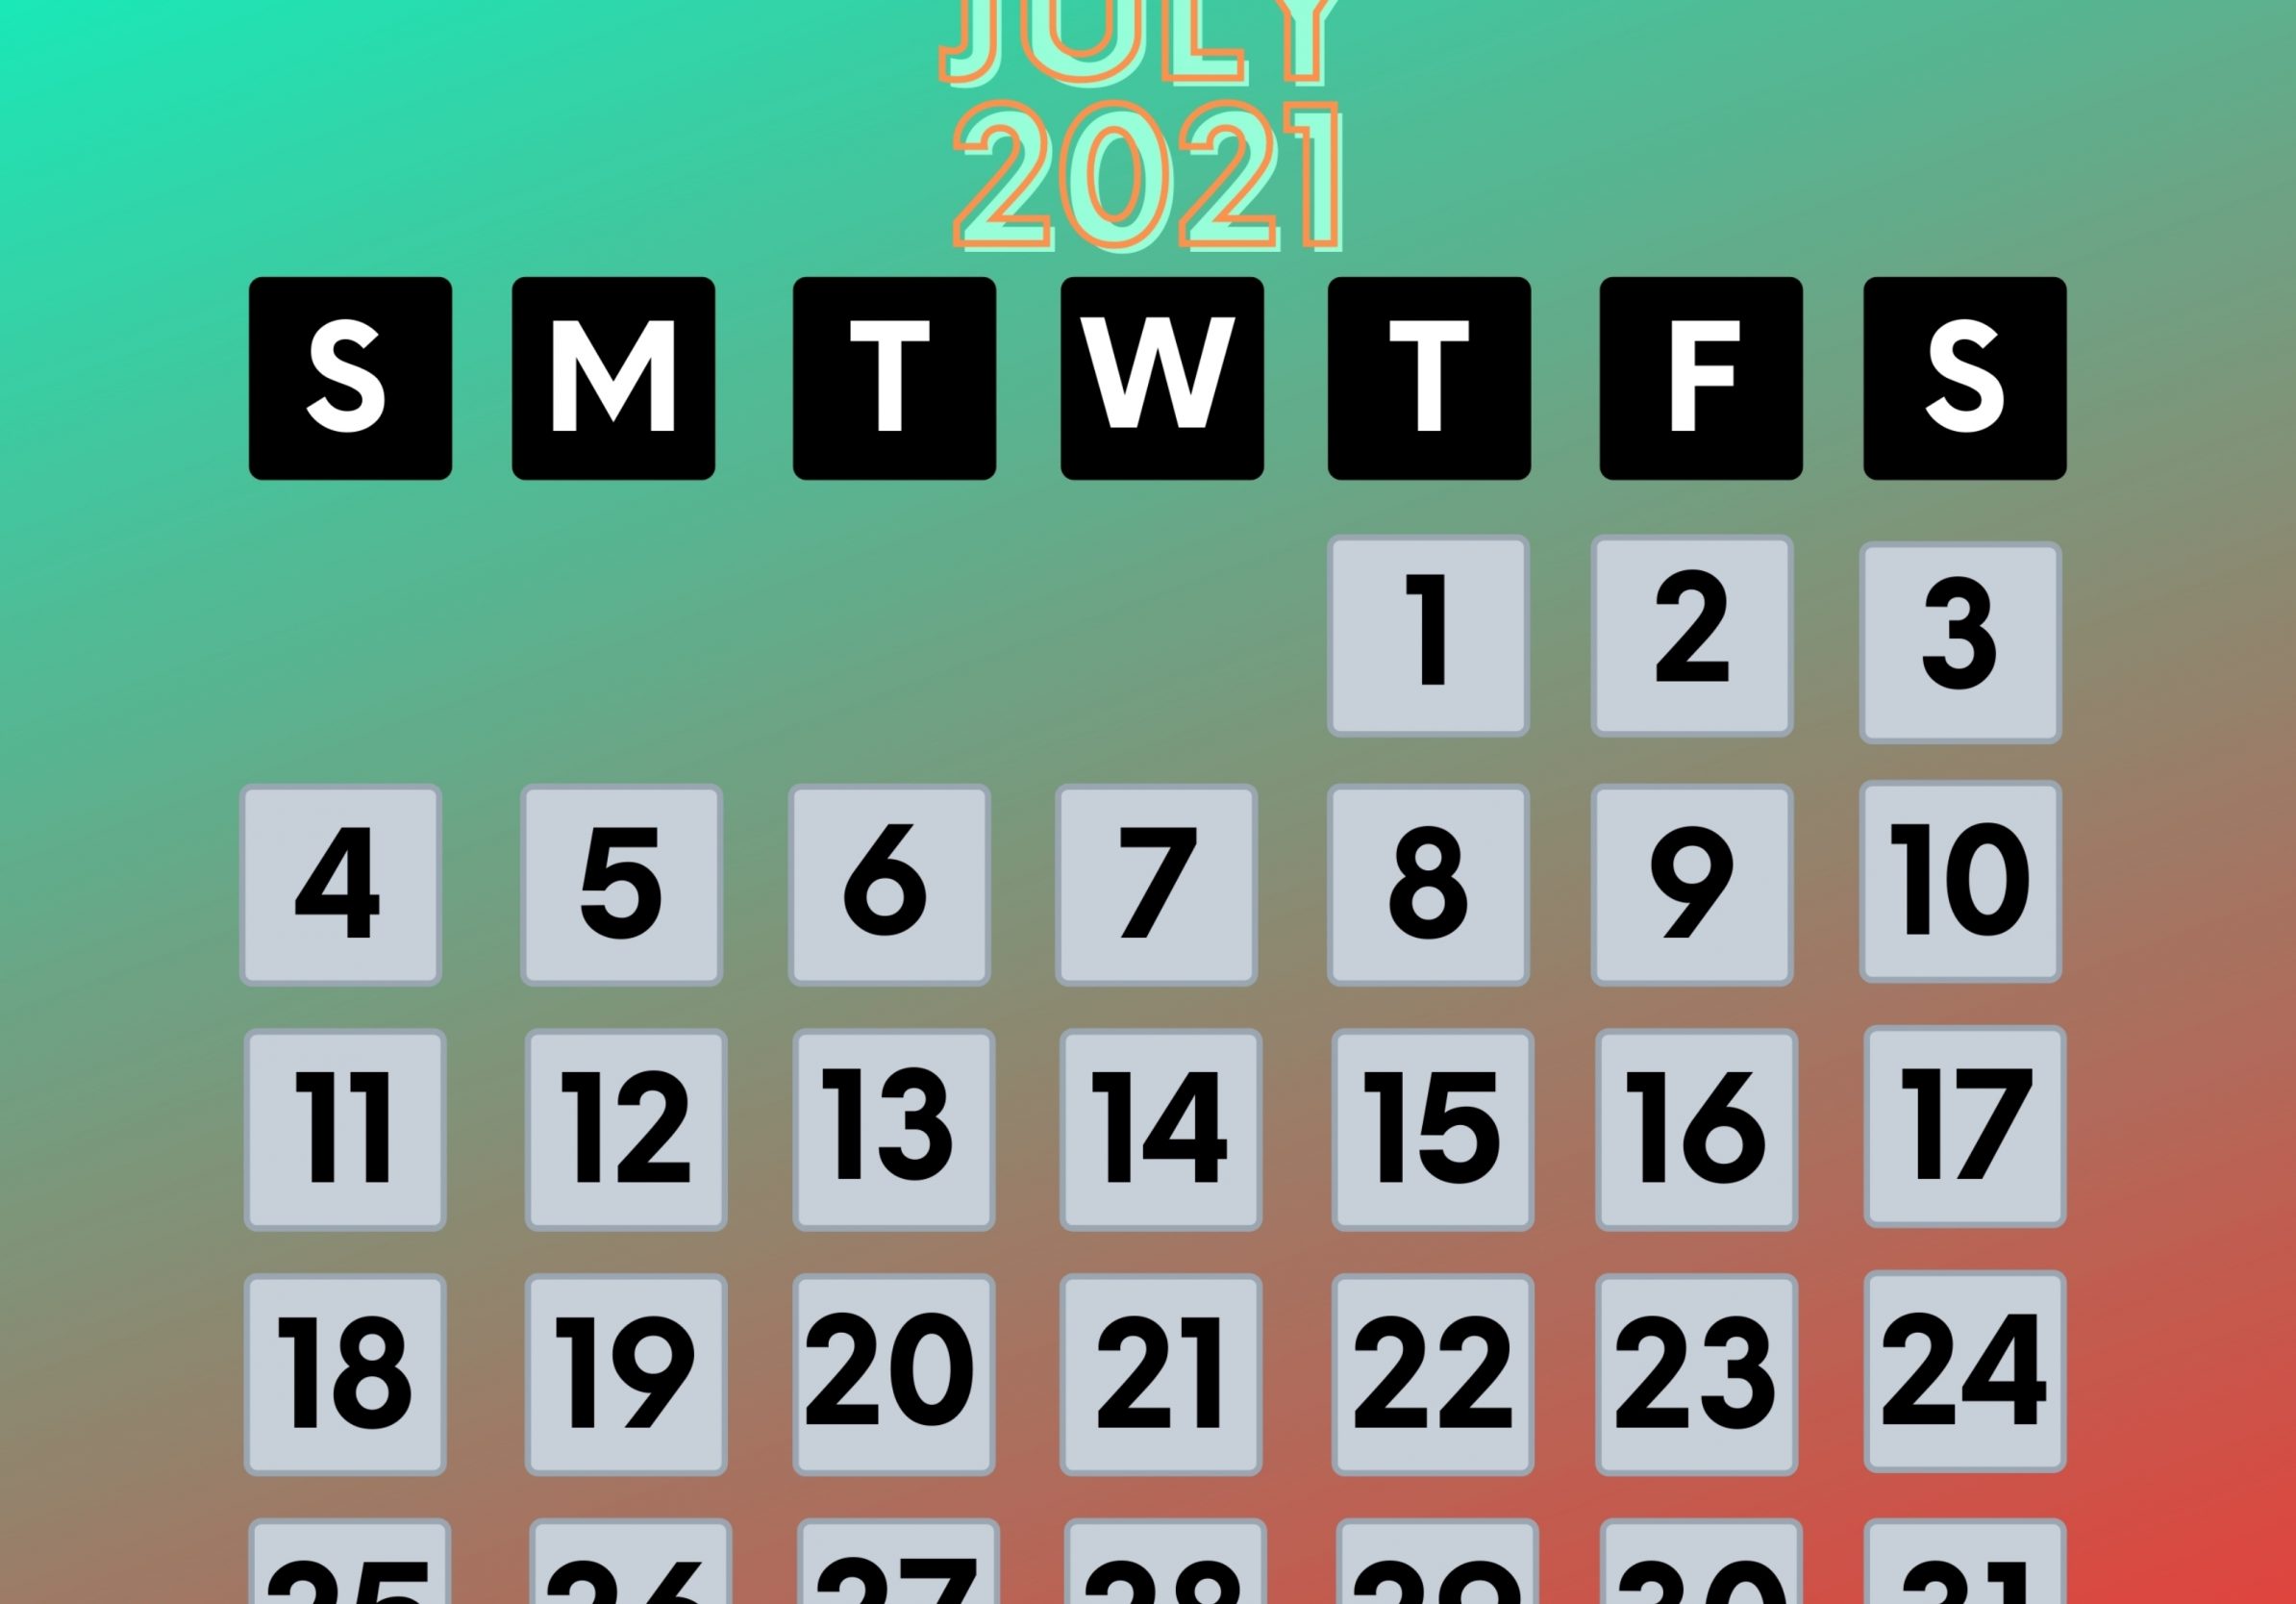 2388x1668 iPad Pro wallpapers July 2021 Calendar iPad Wallpaper 2388x1668 pixels resolution